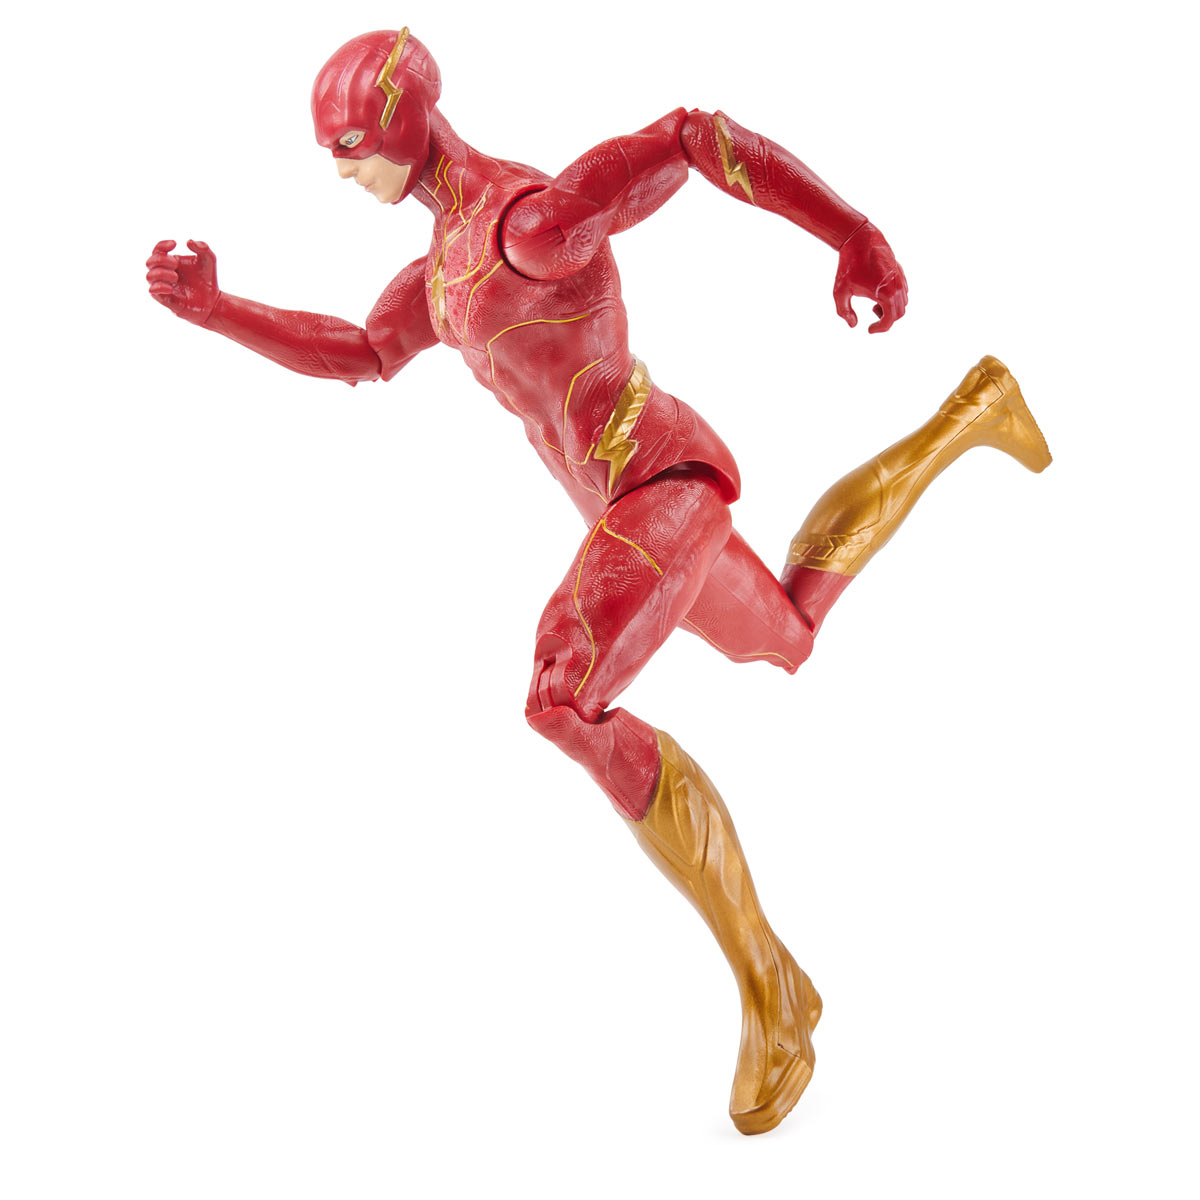 The Flash - Boneco de 30cm do Flash